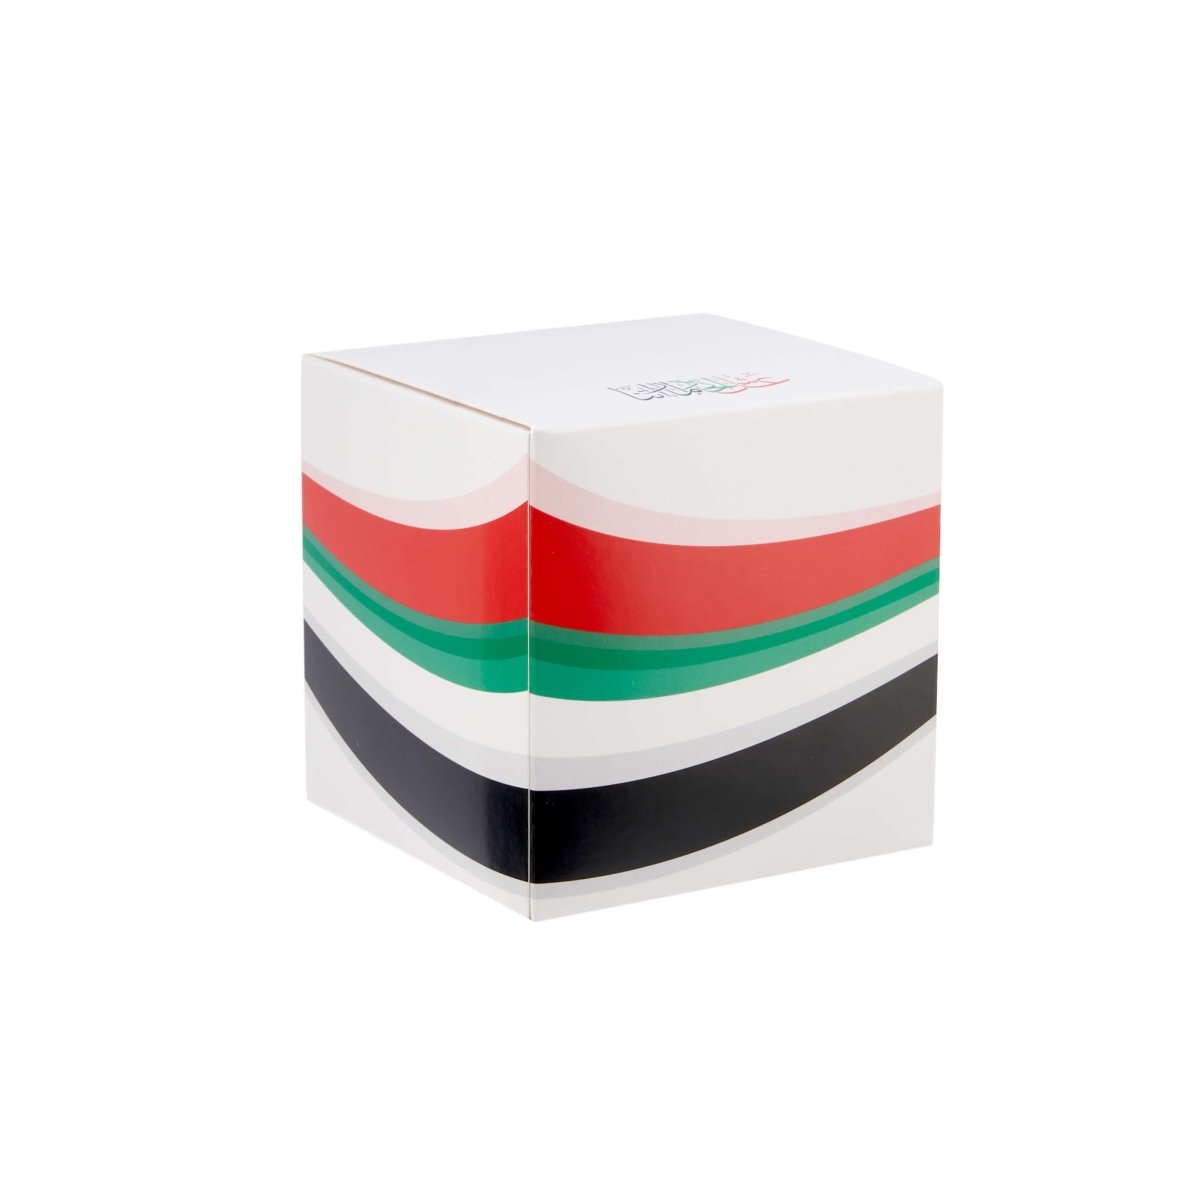 UAE National Day Theme Favor Box - hotpackwebstore.com - Gift Box